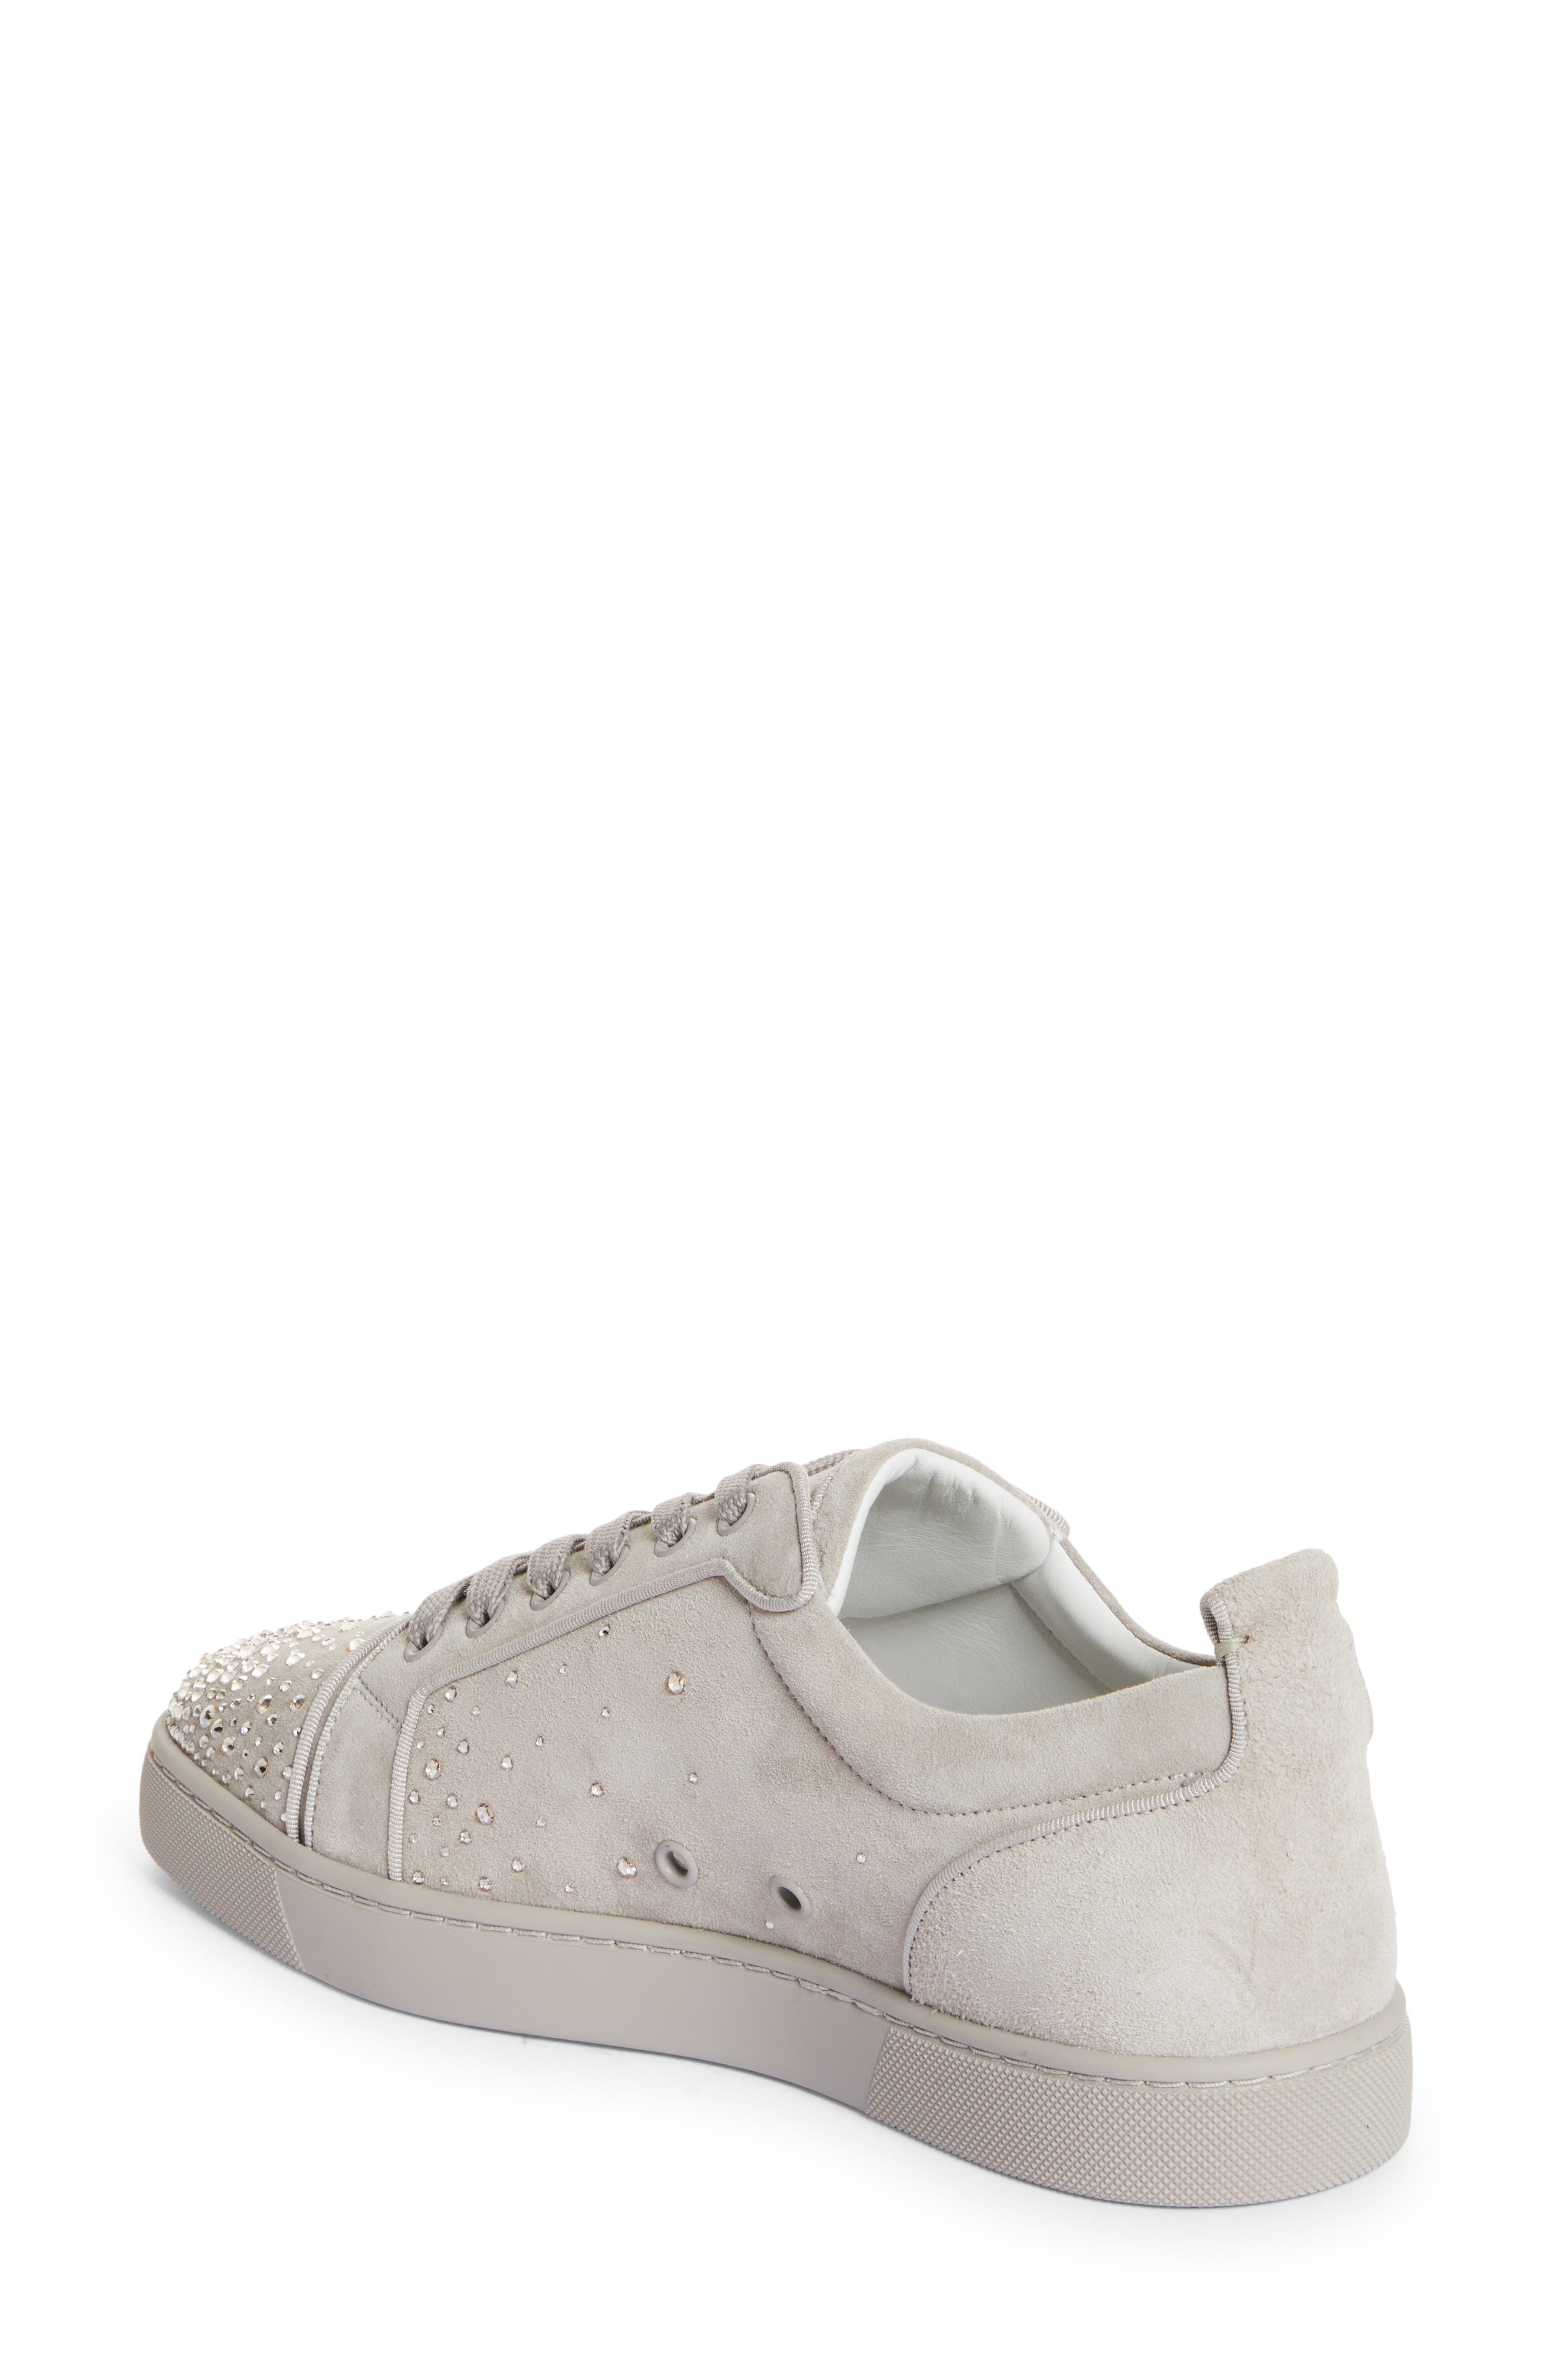 Christian Louboutin Louis Junior Spikes White/Goose Sneakers New